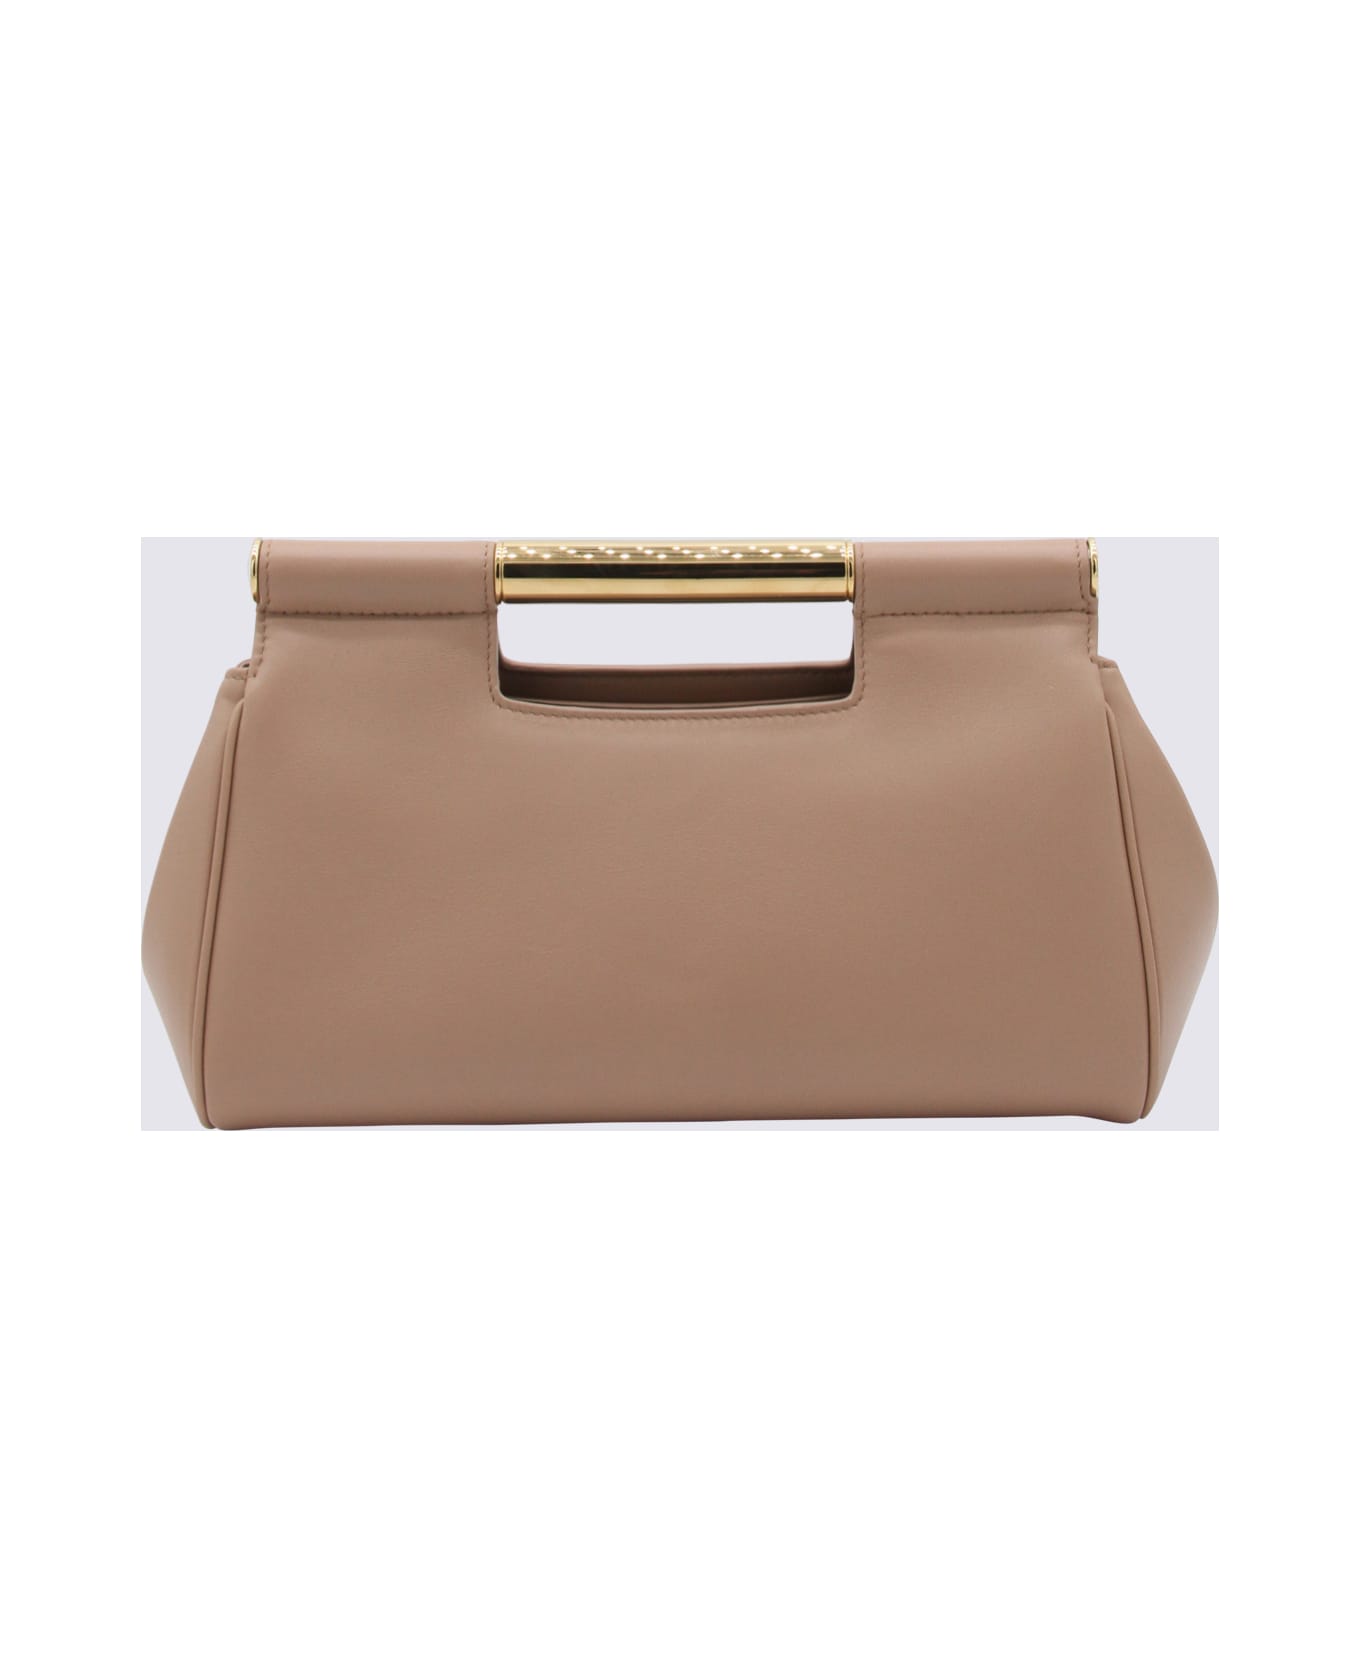 Dolce & Gabbana Beige Medium Leather Top Handle Bag - Beige